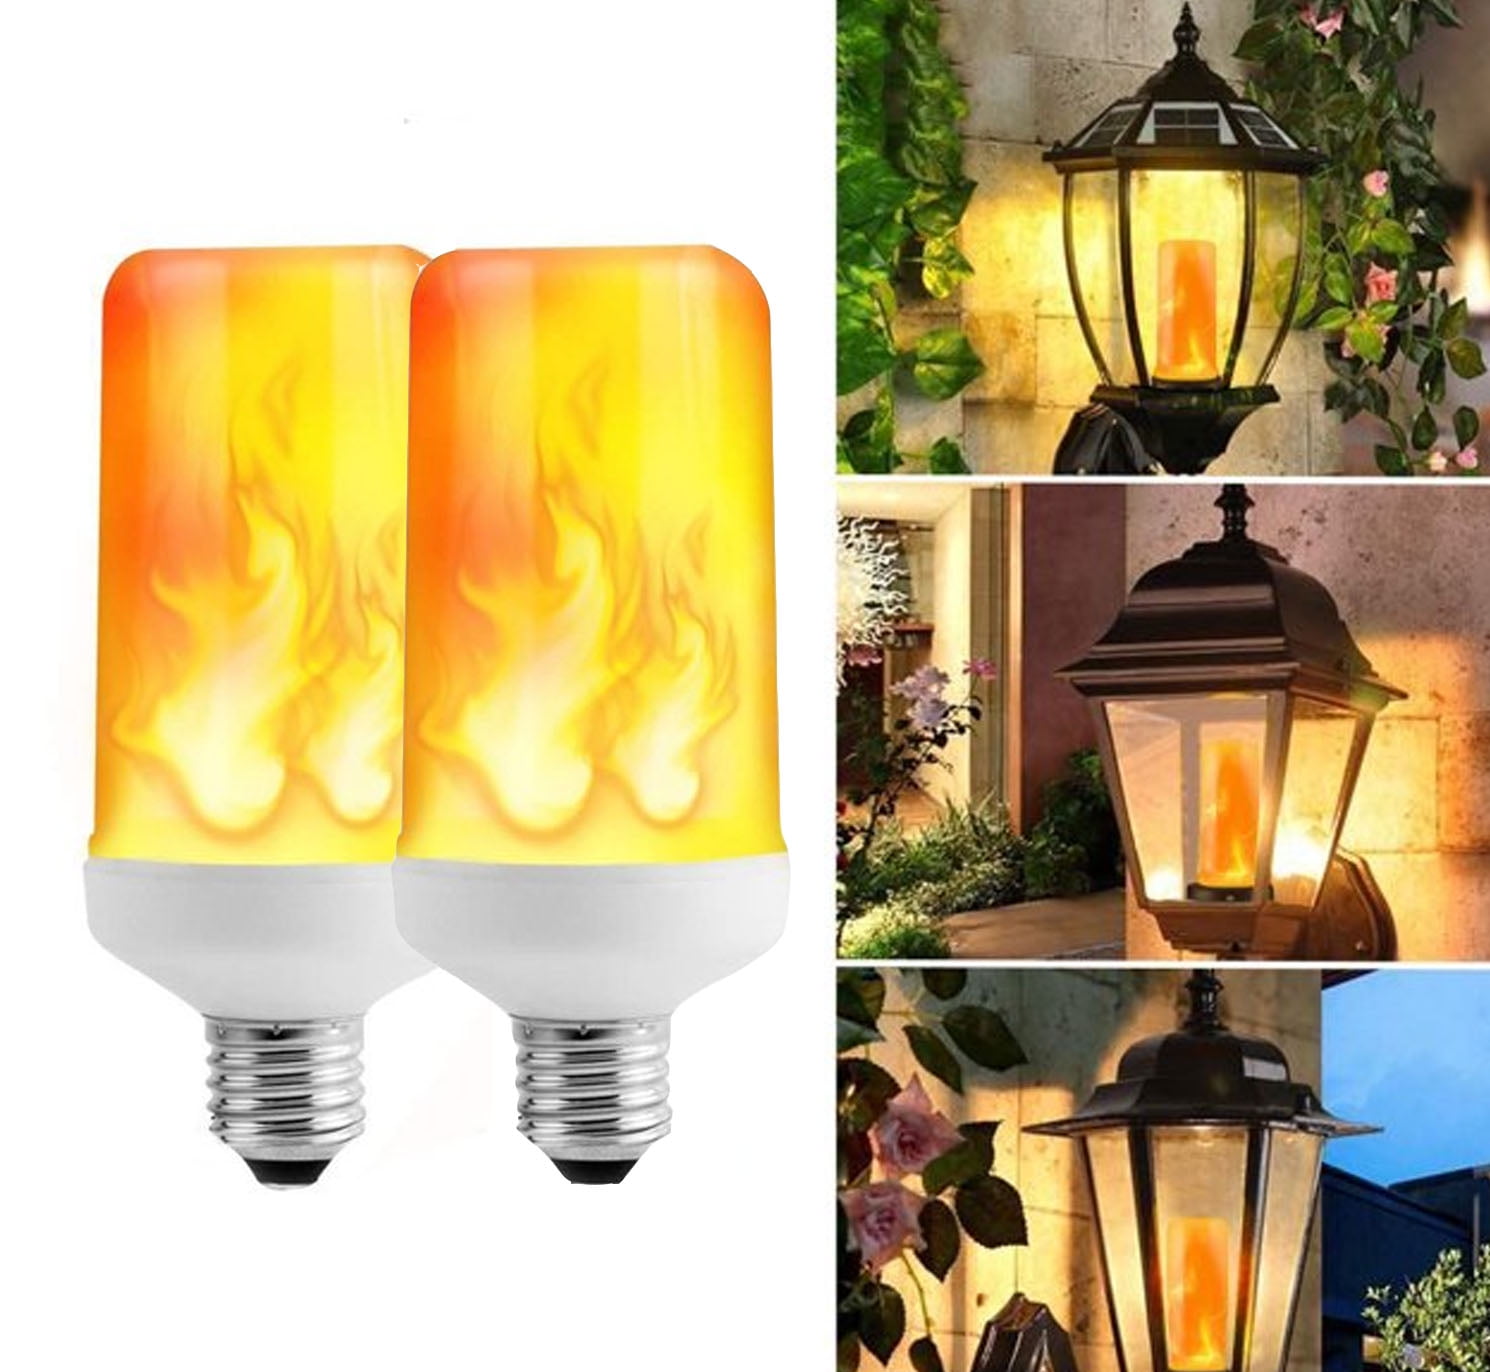 4 Models LED Flame Effect Simulated Nature Fire Light Bulbs E27 Decoration Lamp 